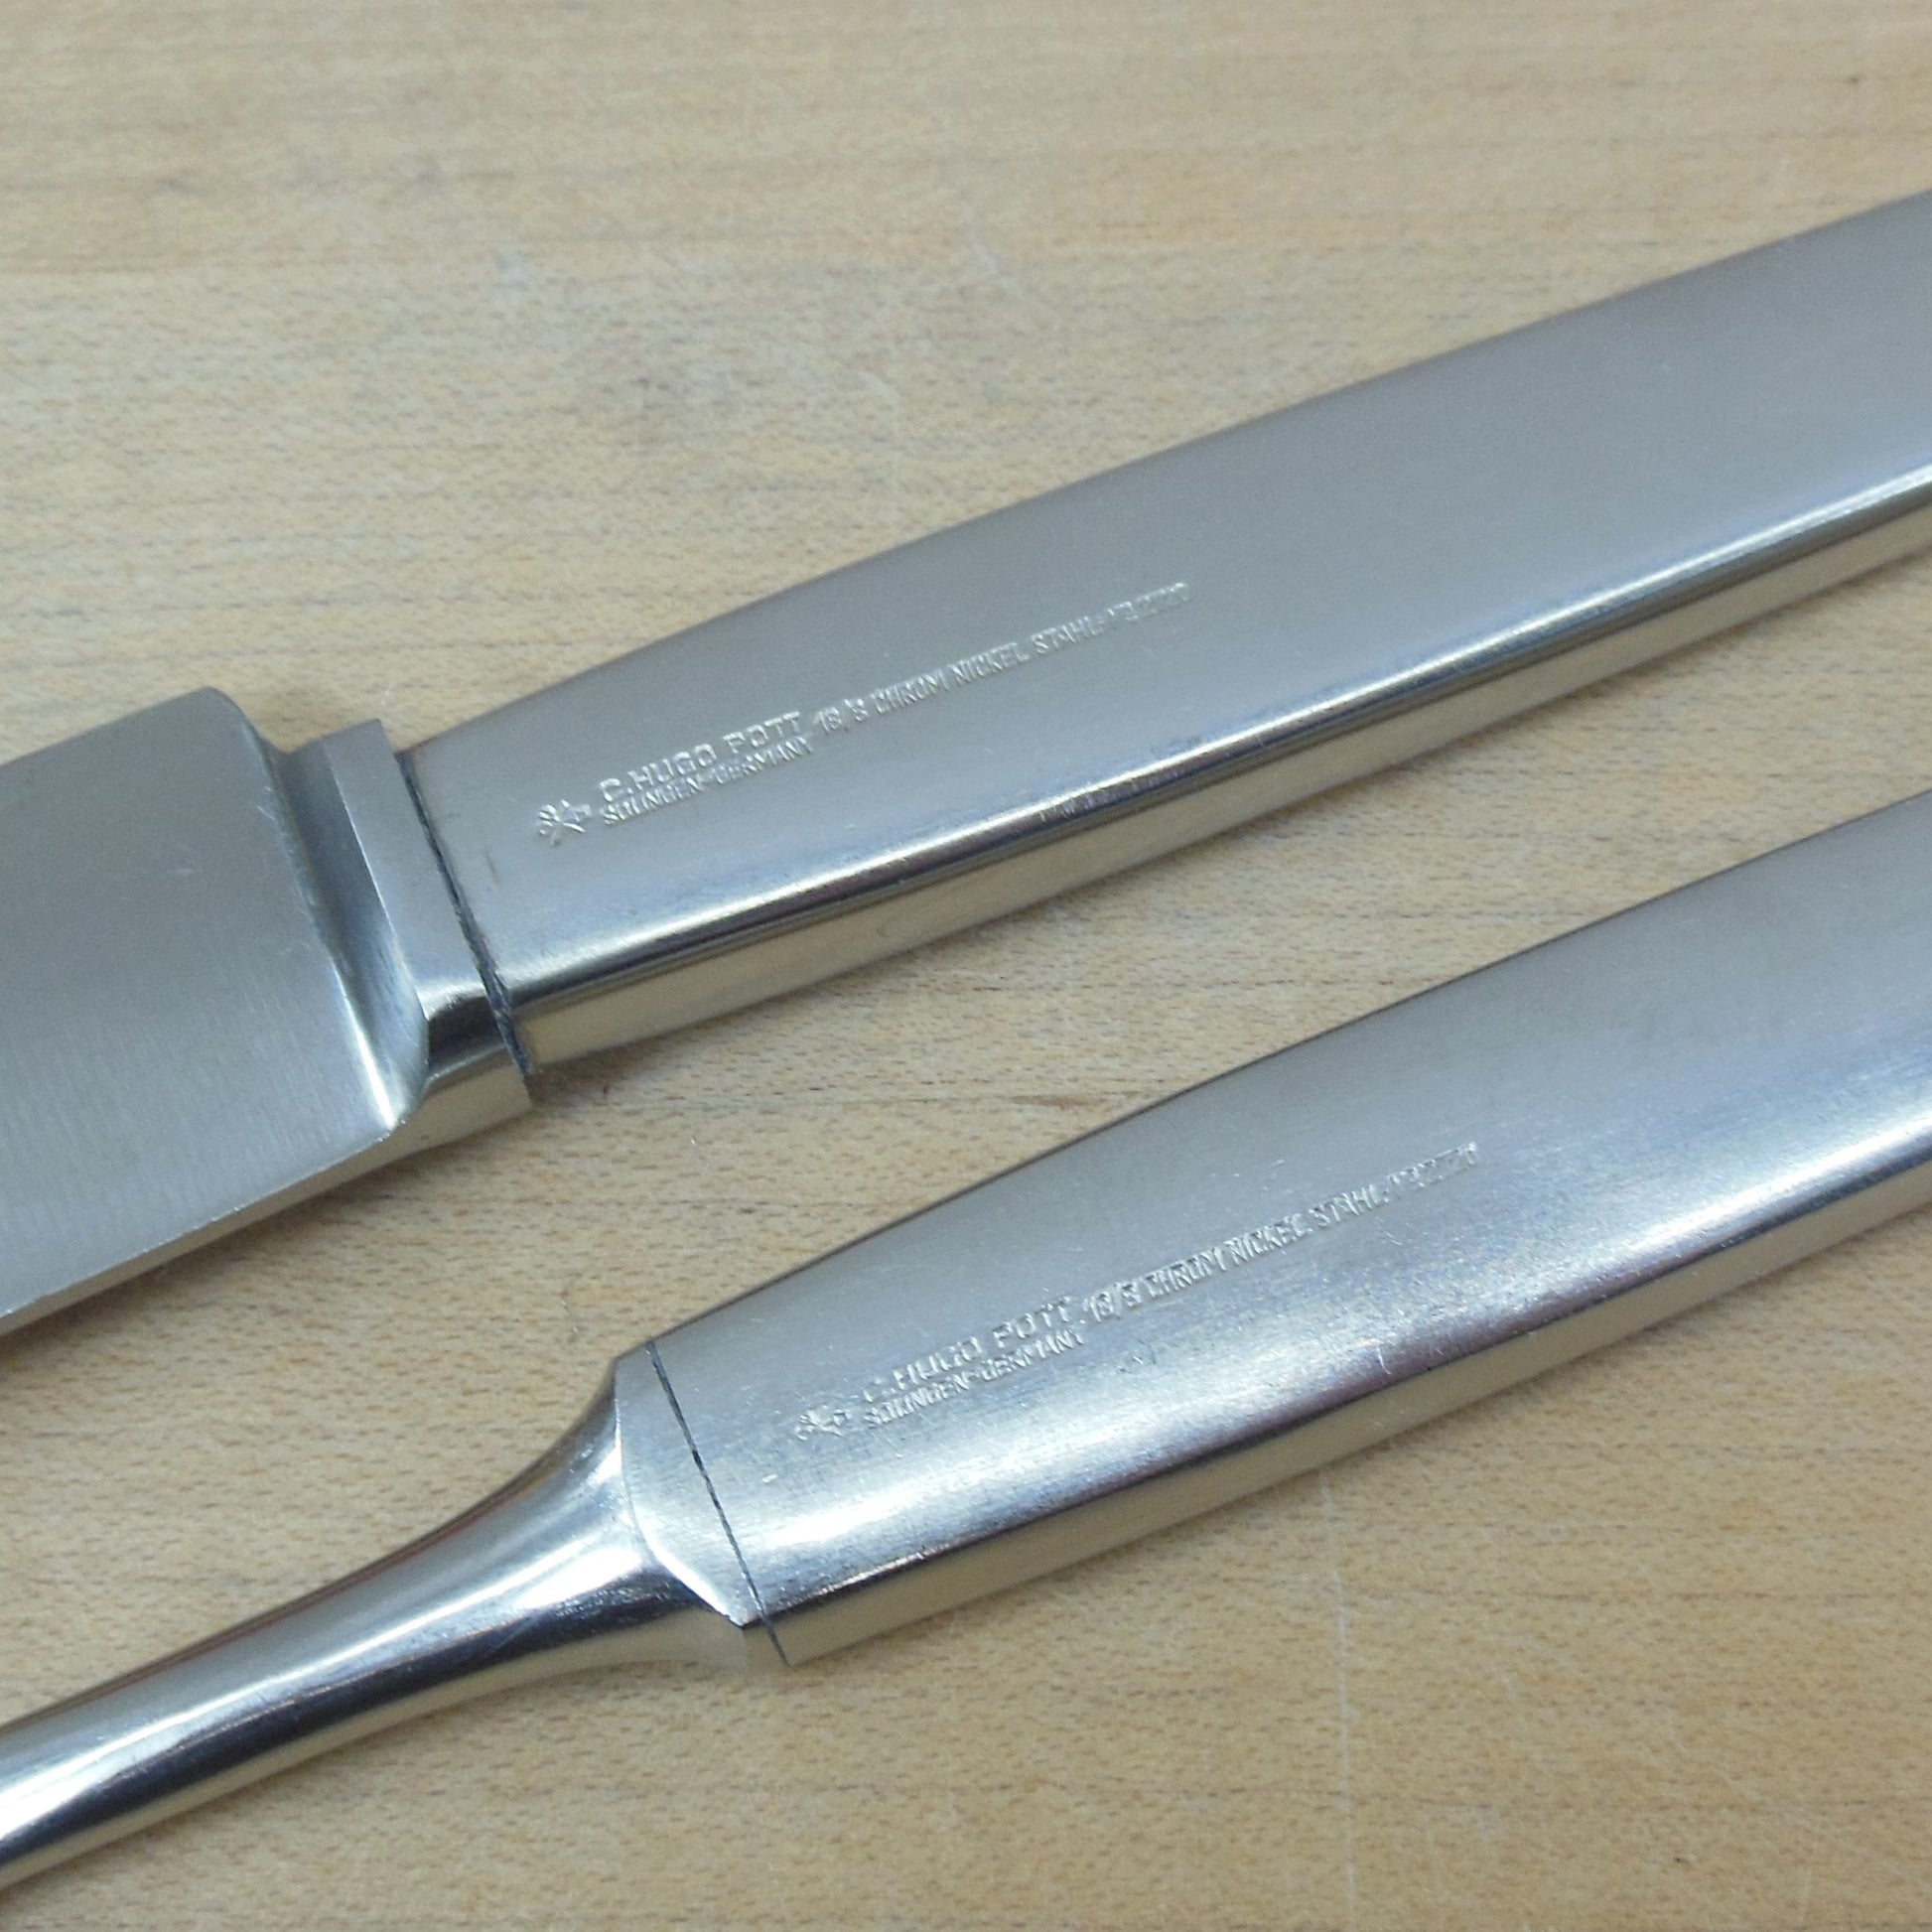 C. Hugo Pott Solingen Germany 2720 Stainless Carving Fork Knife Set Used